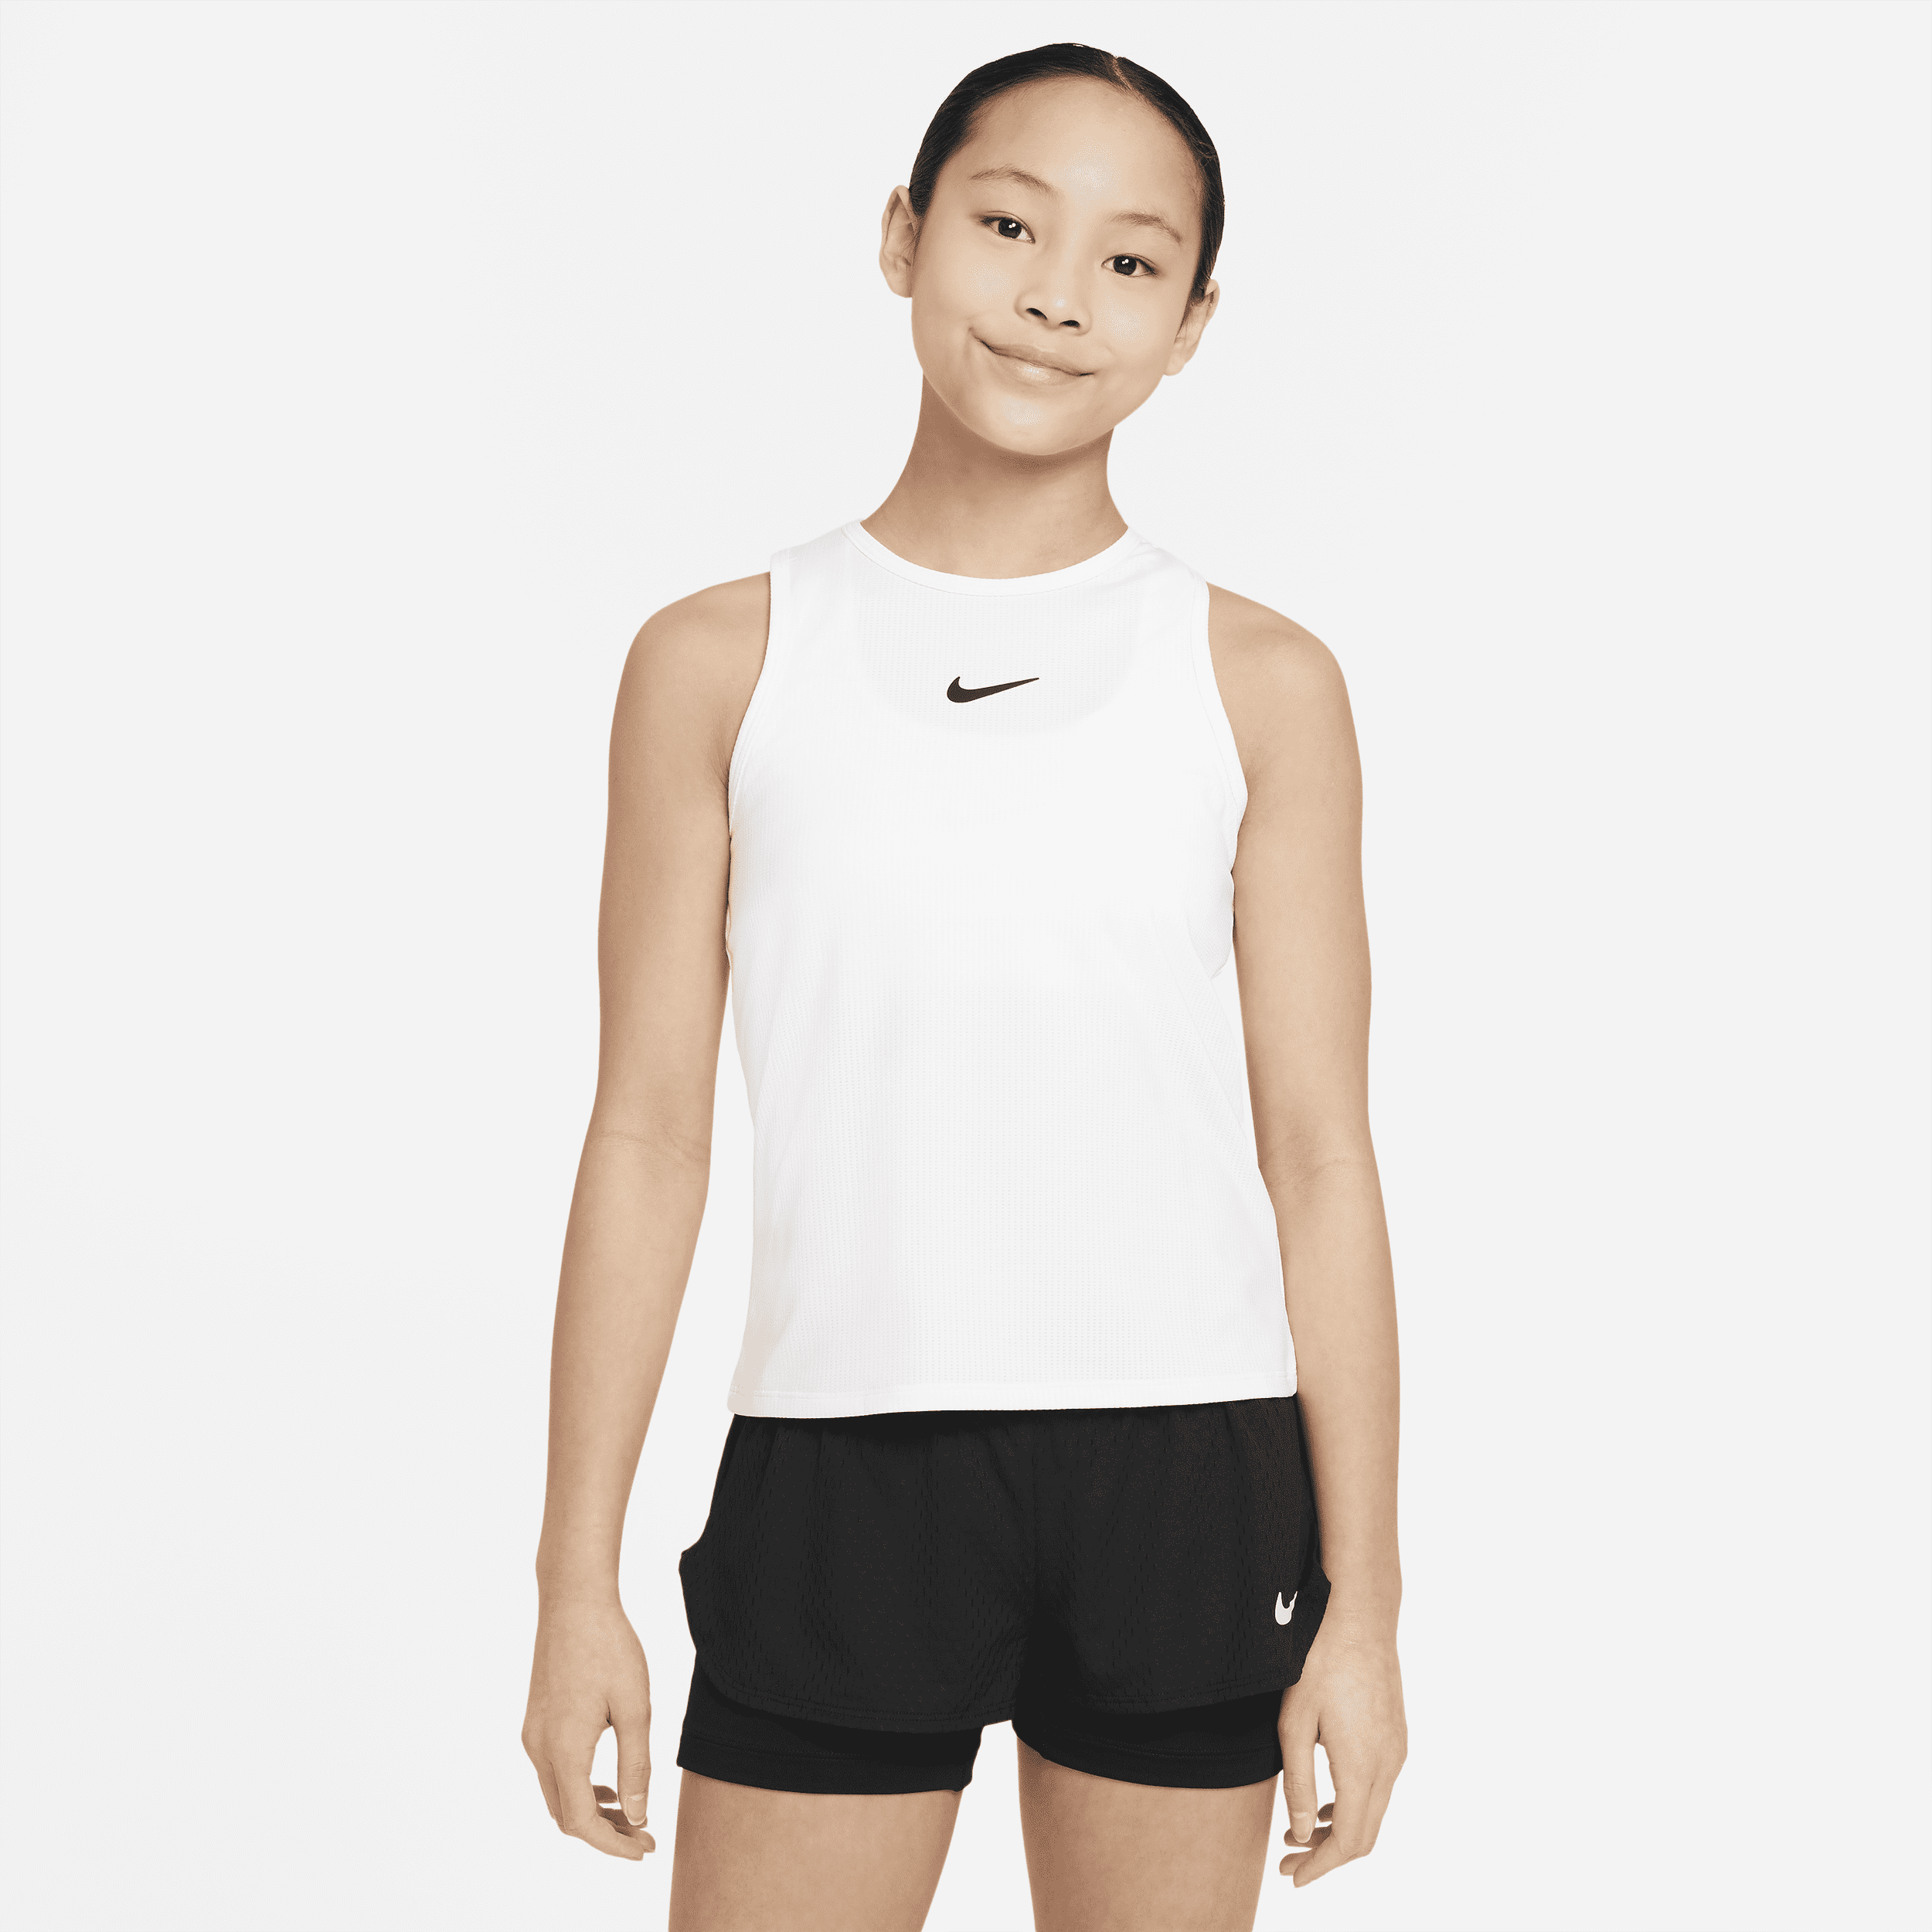 Canotta da tennis Dri-FIT Nike Victory – Ragazza - Bianco